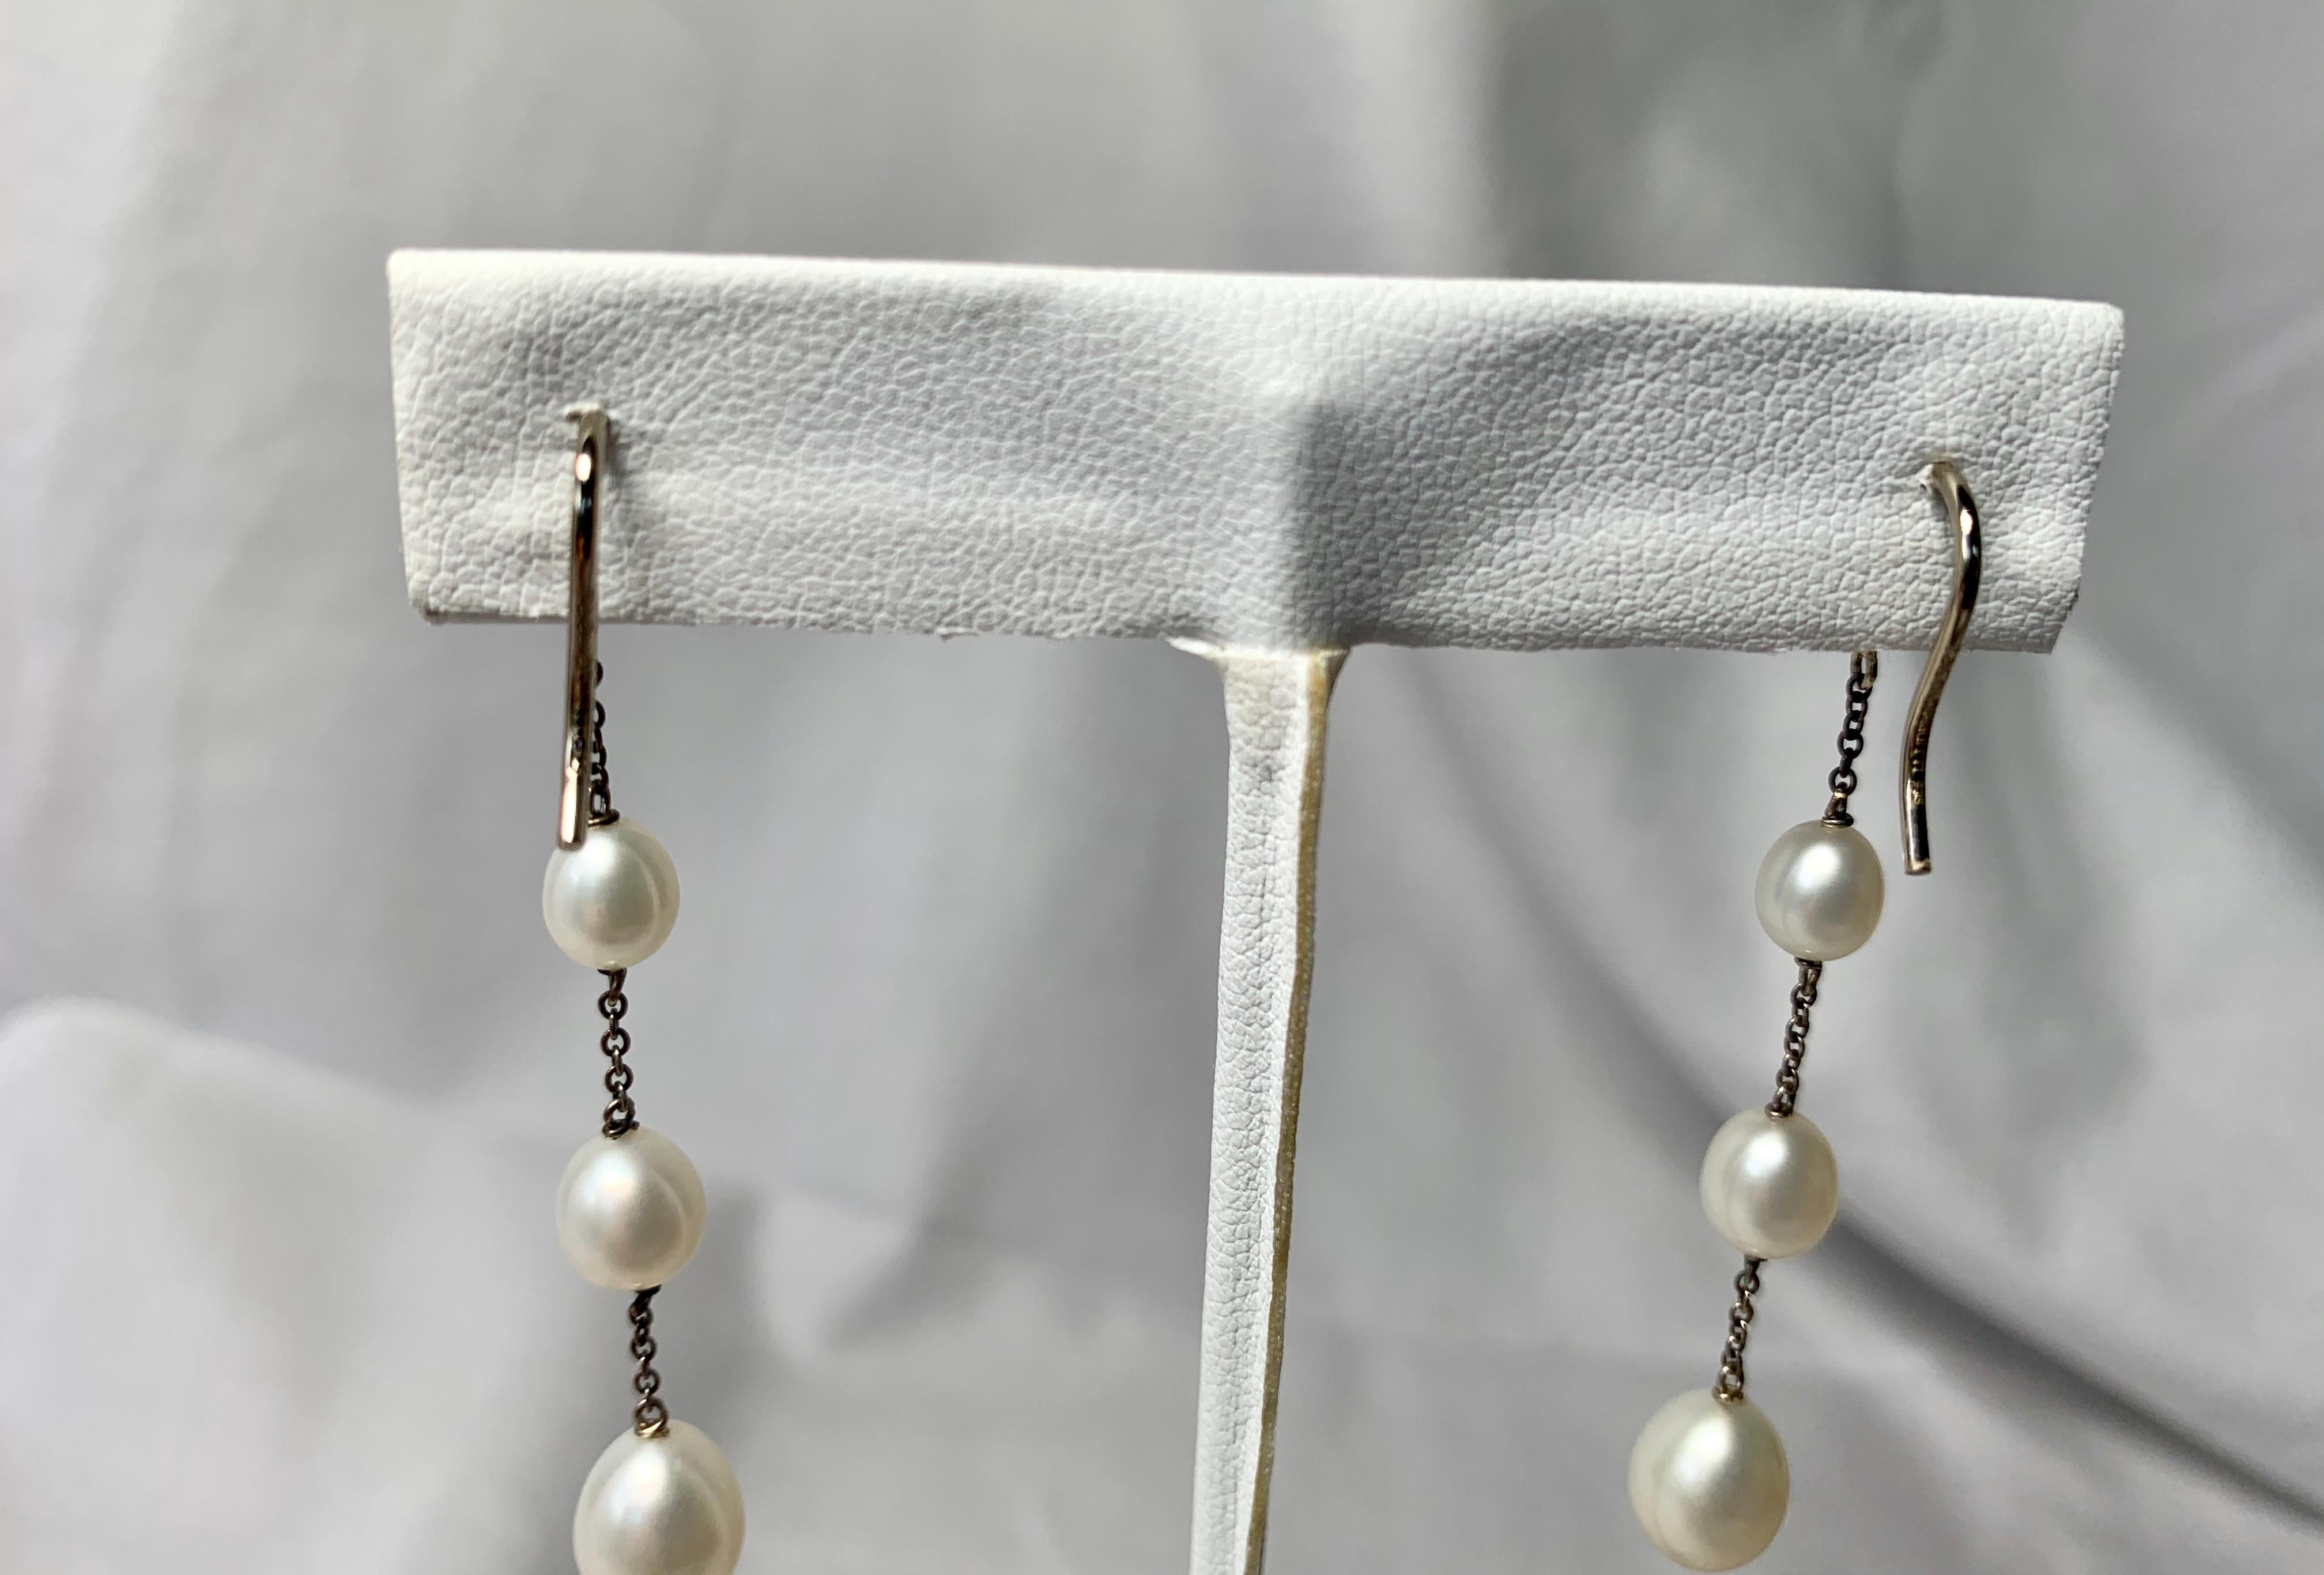 Oval Cut Tiffany & Co. Elsa Peretti Pearls by the Yard Chain Earrings Sterling Silver